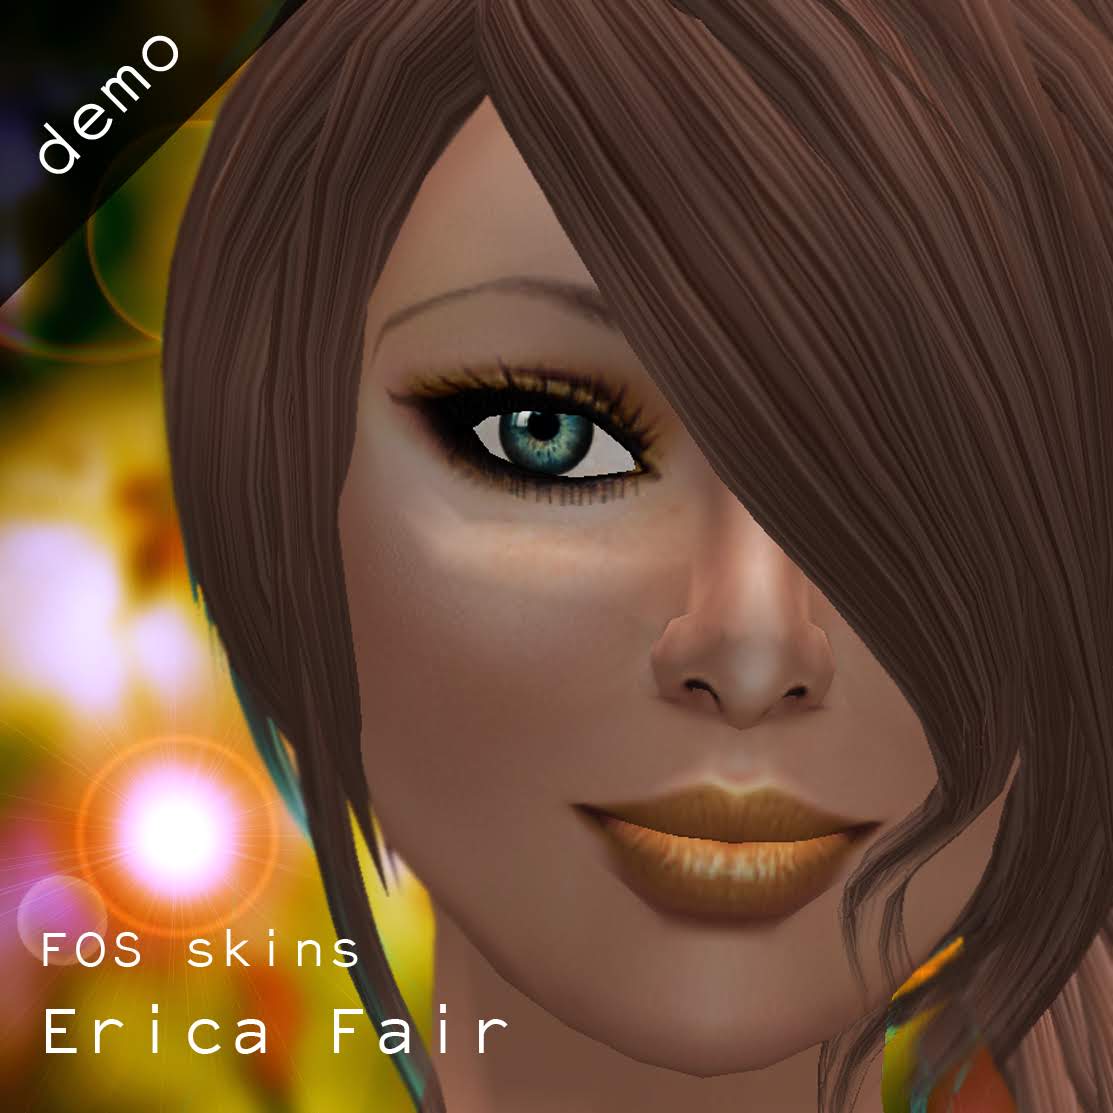 Erica fair